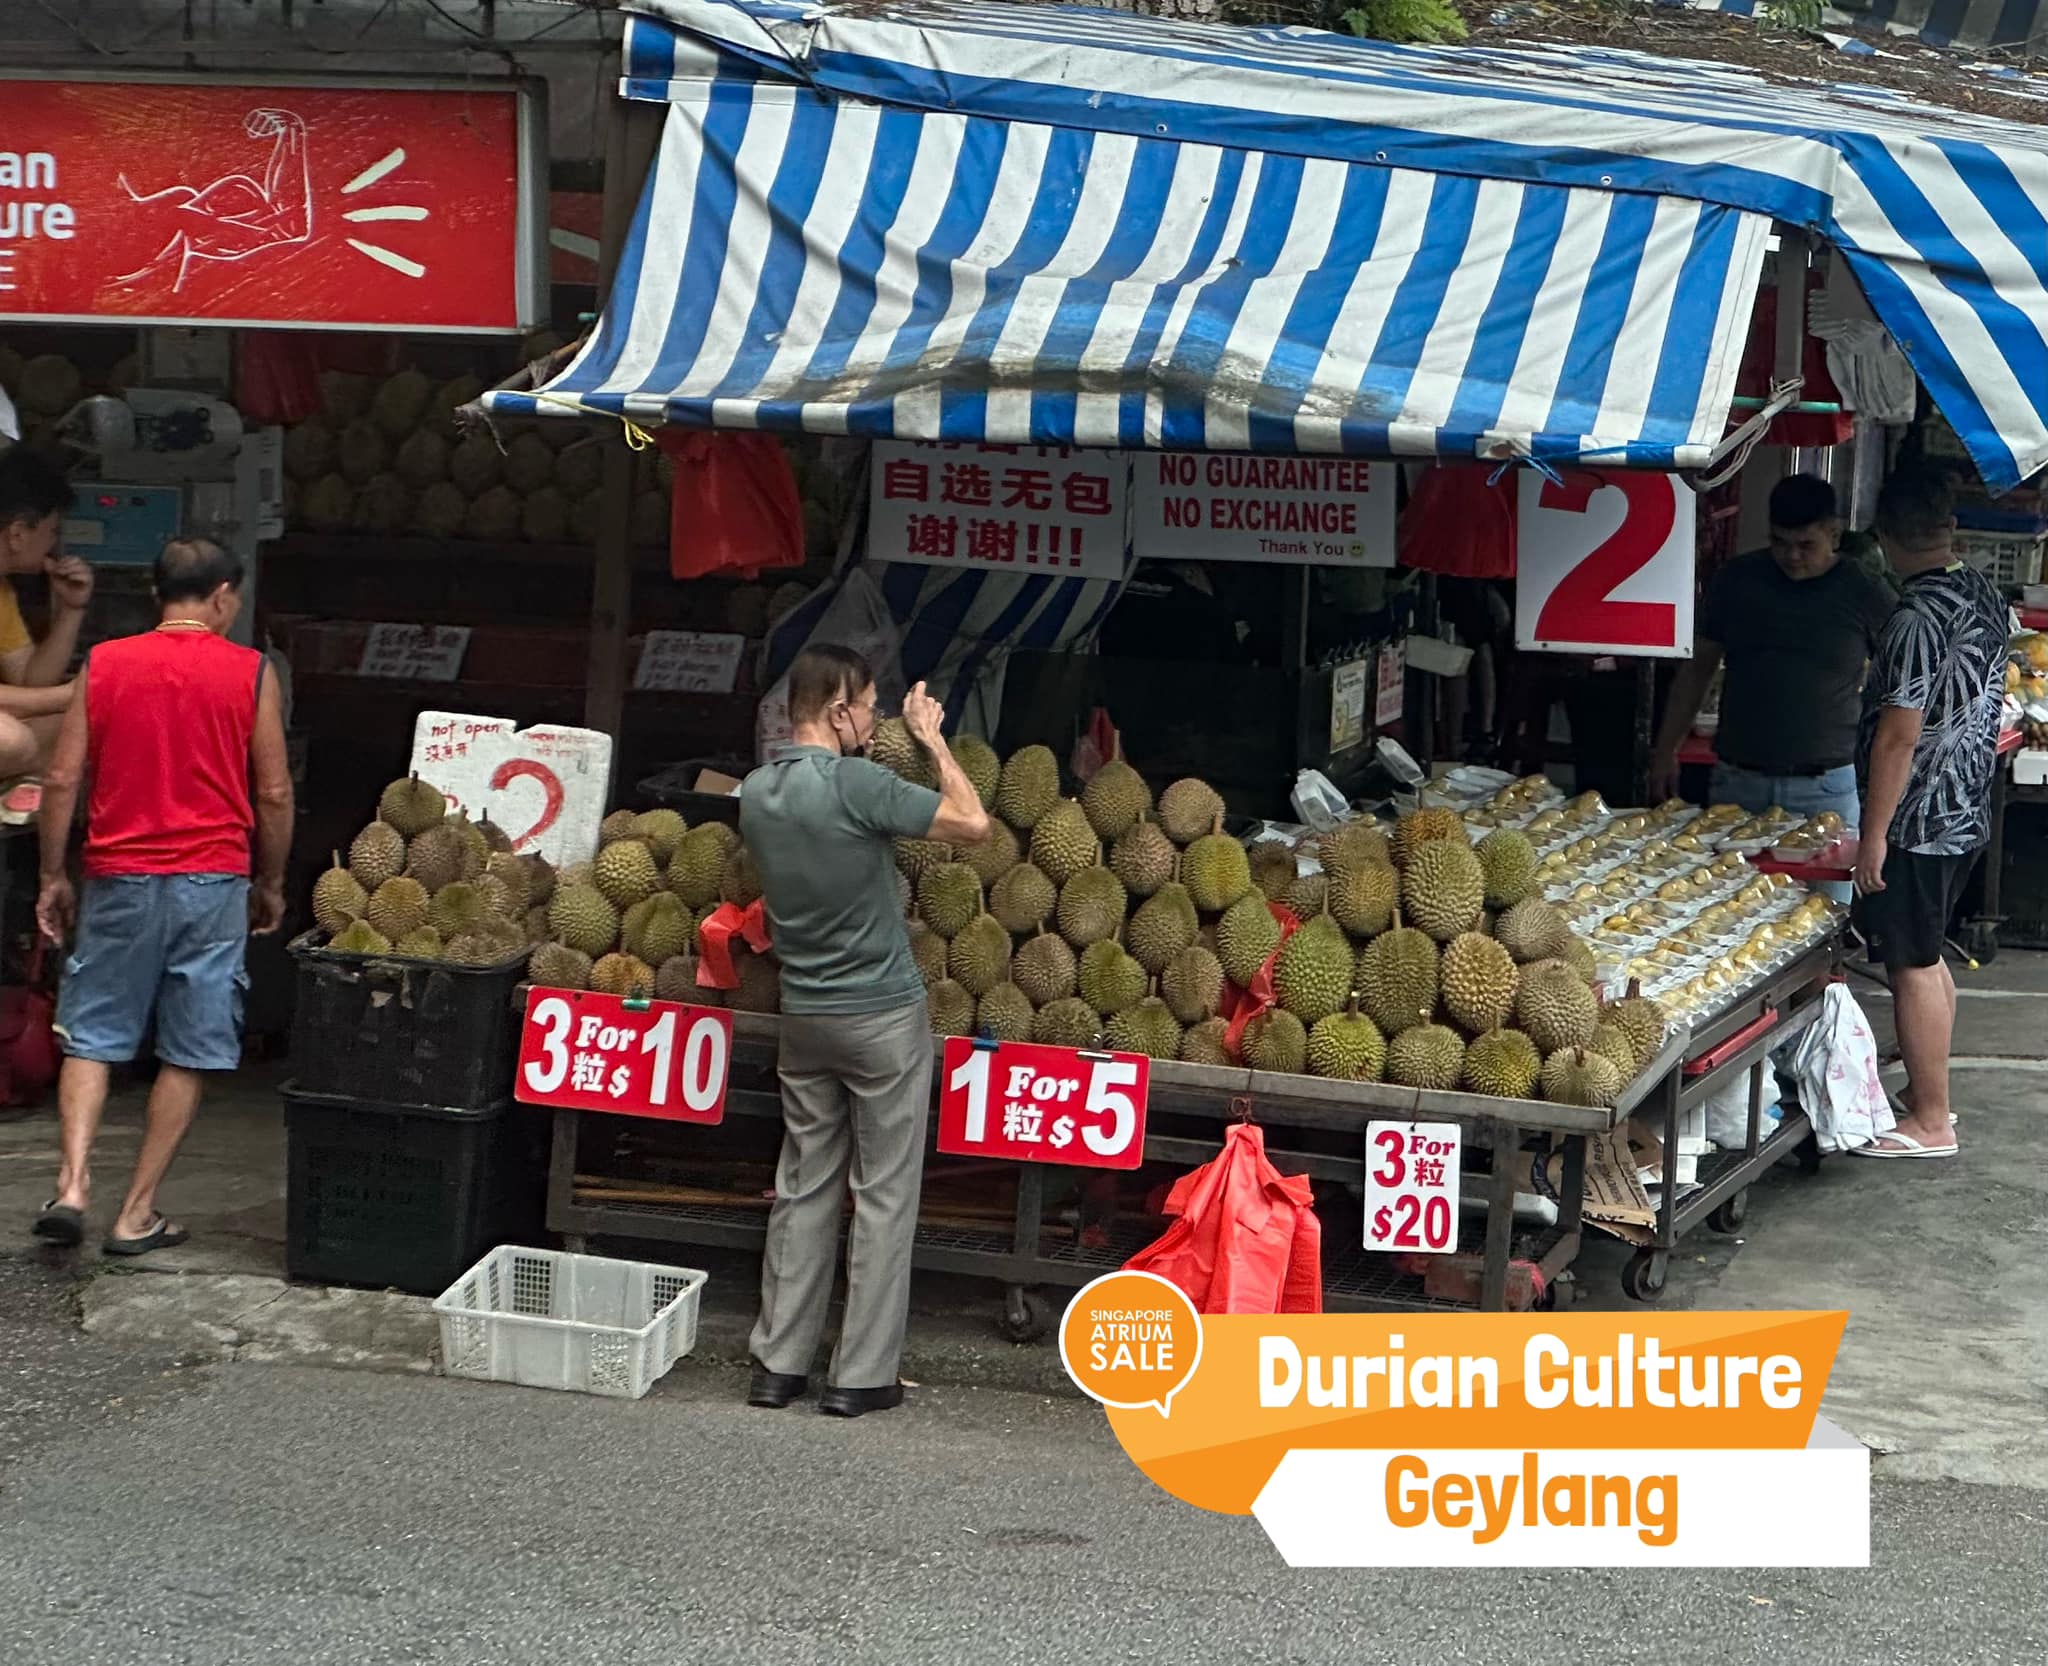 Durian Culture In Geylang Has $2 Durian | Eatbook.sg